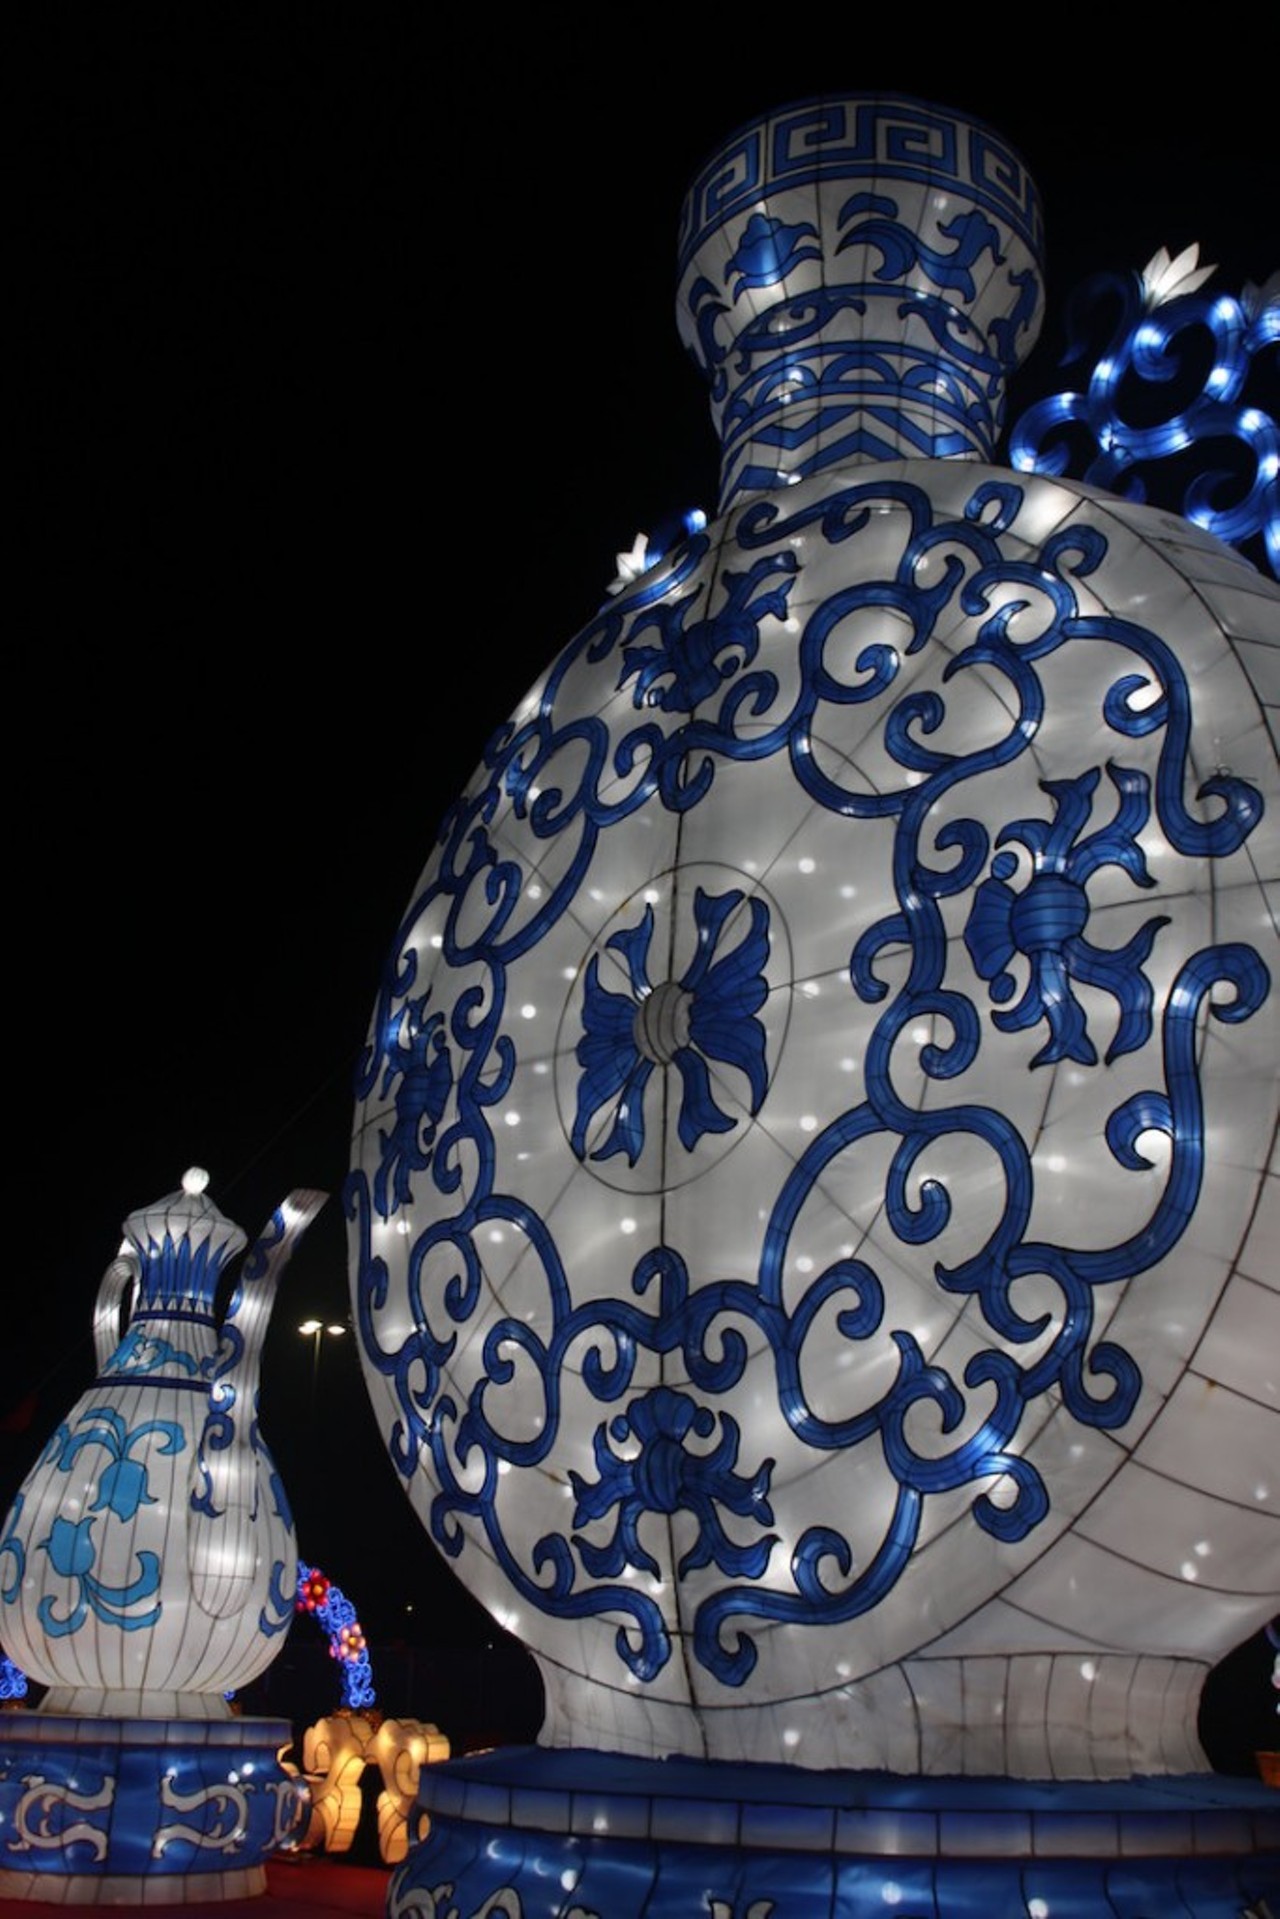 Sponsored: Holiday Magic: Festival of Lights Brings Celebration to Retama Park